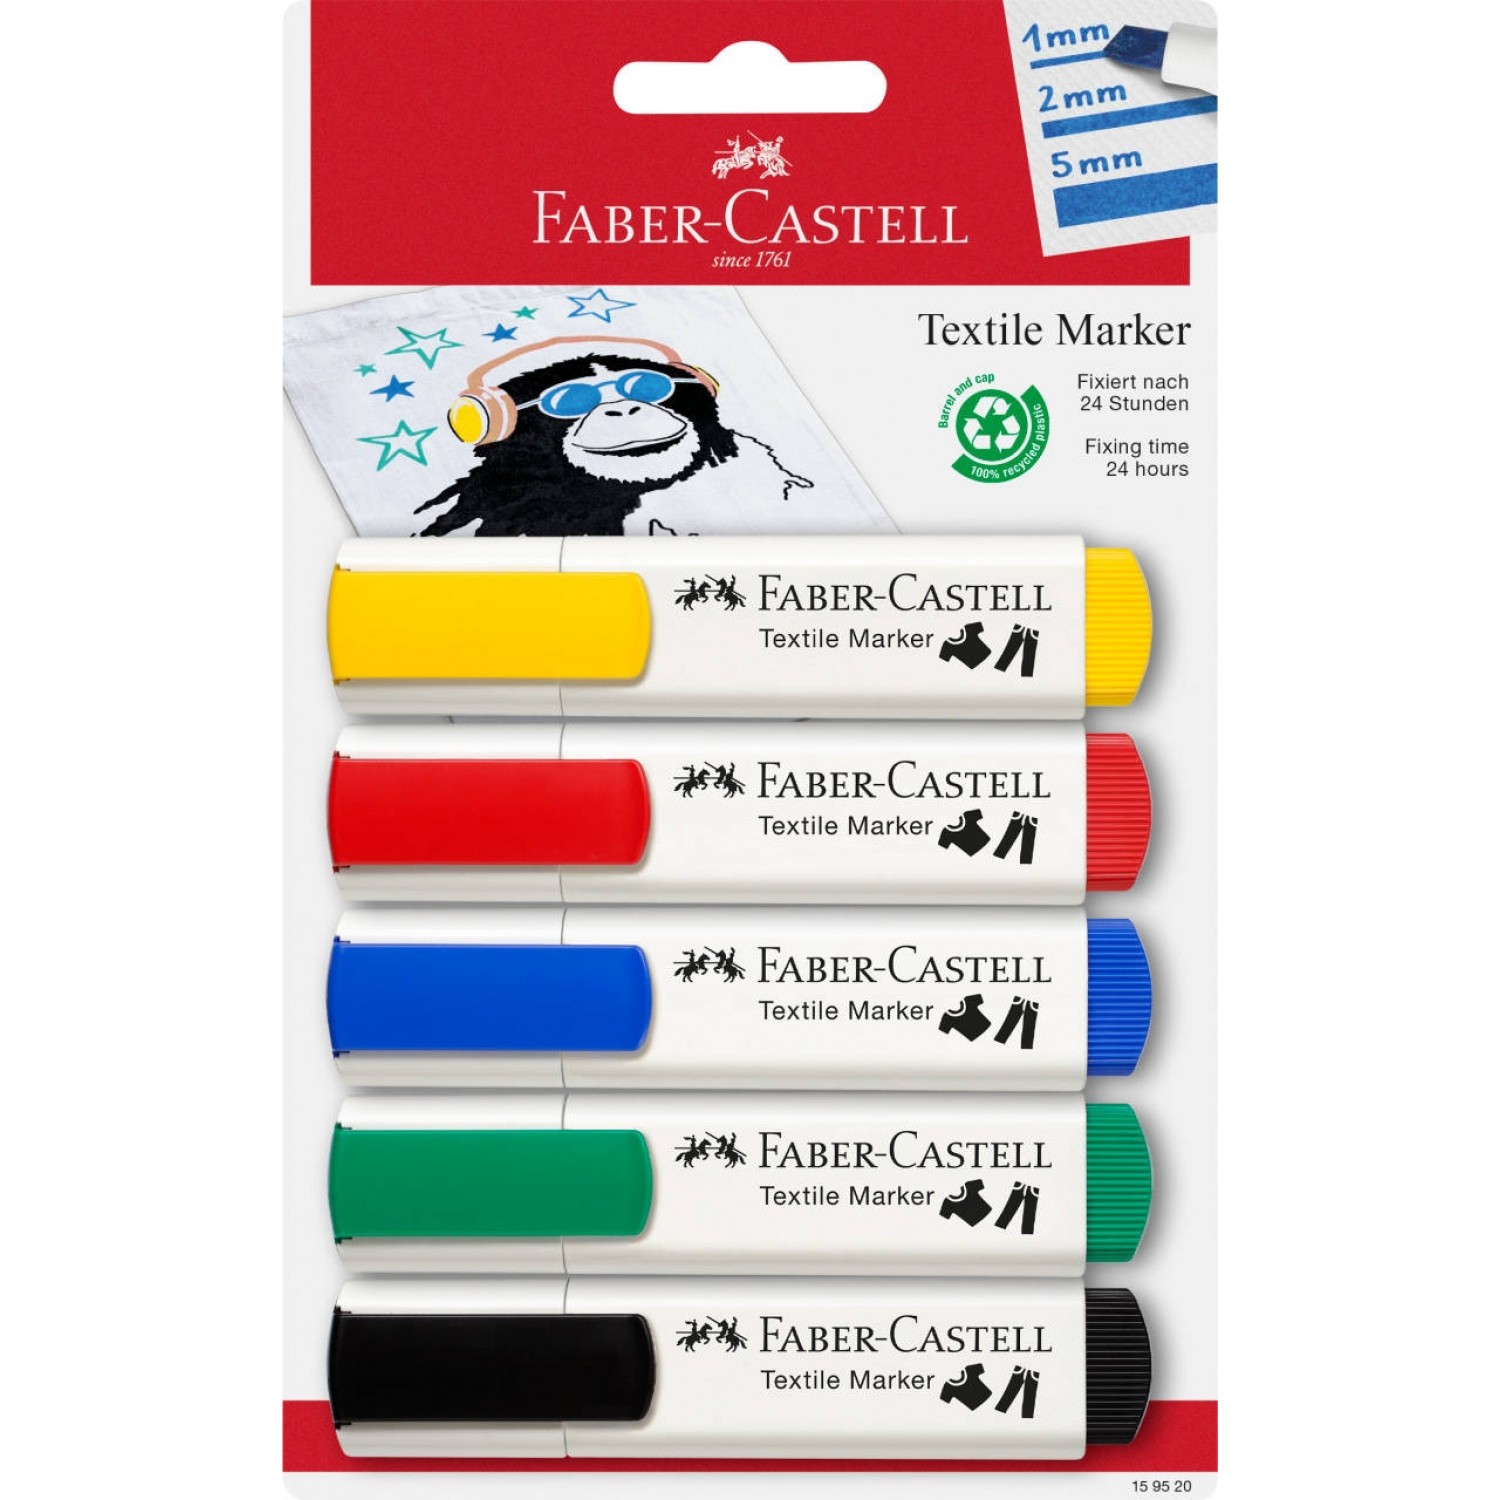 Bek Vlieger wandelen Faber-Castell Textile Marker assorted pack of 5 colours | Greenpicks